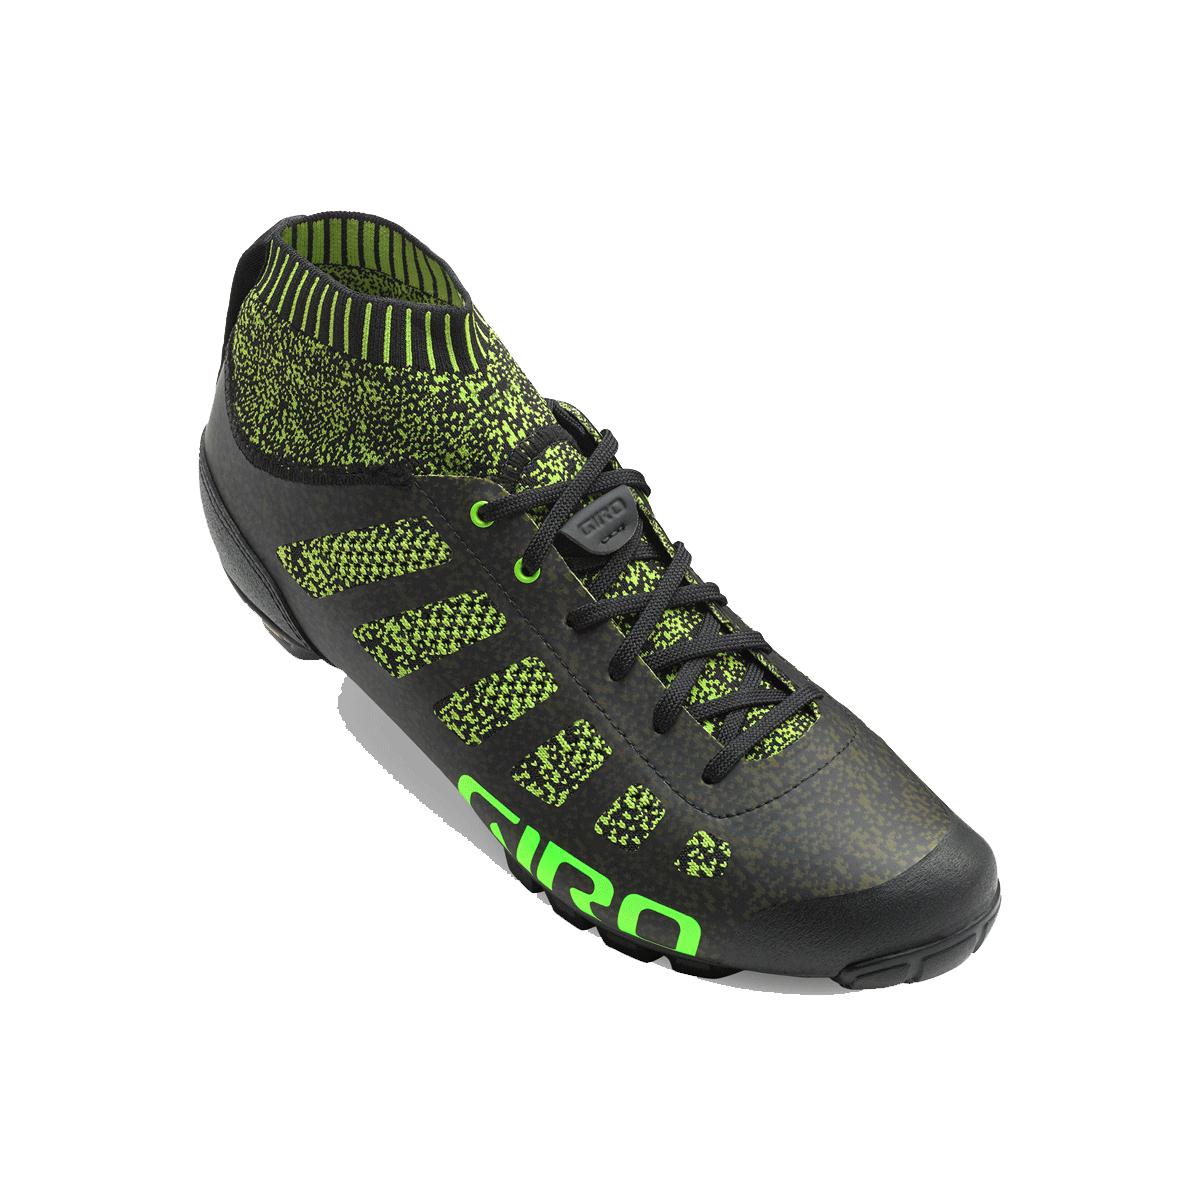 GIRO Empire VR70 Knit MTB Cycling Shoes 2018 Lime/Black 45